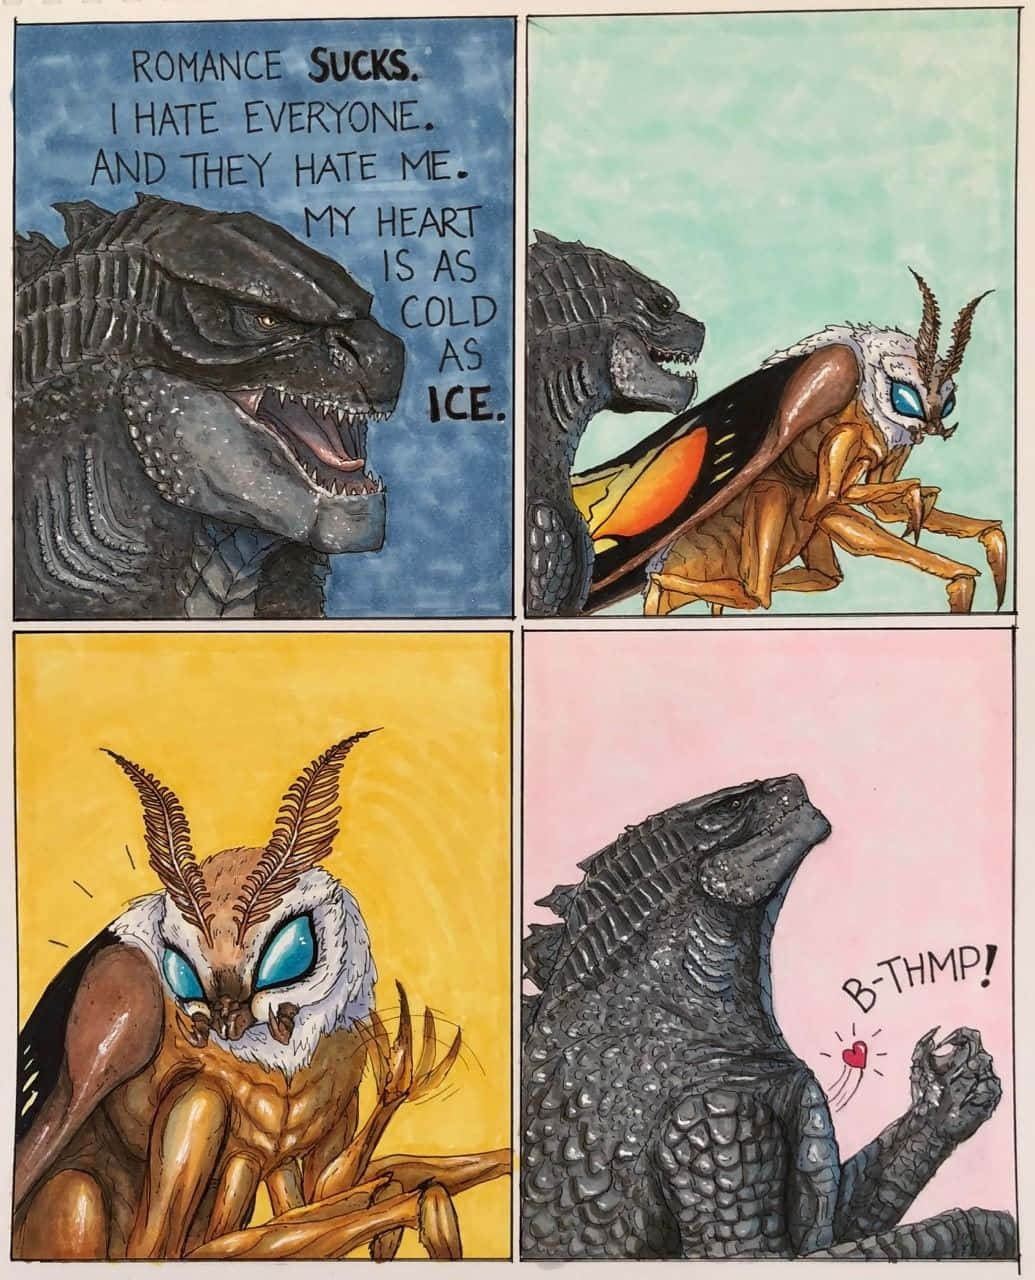 Epic showdown between Godzilla and Mothra Wallpaper